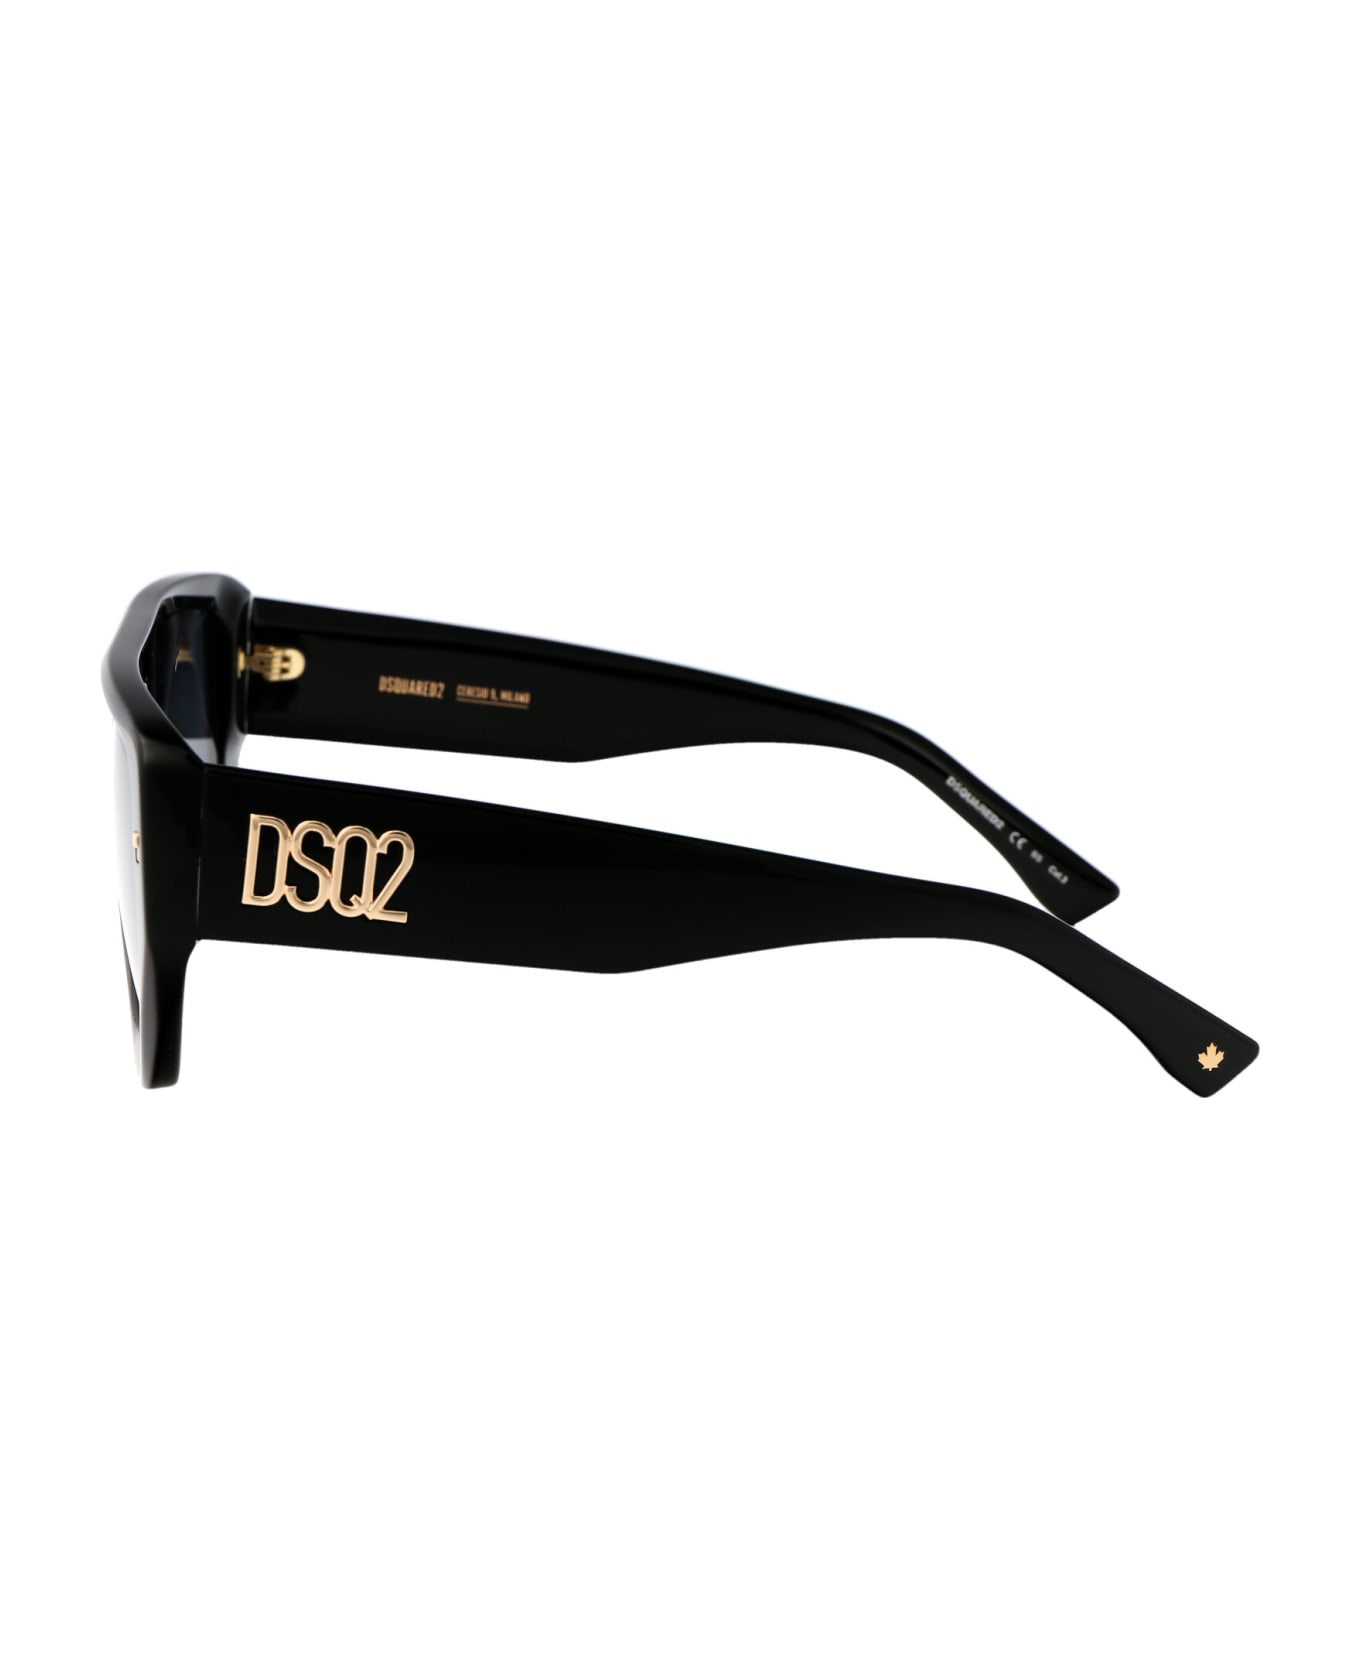 Dsquared2 Eyewear D2 0088/s Sunglasses Holbrook - 2Sunglasses Holbrook KaAla H856-01